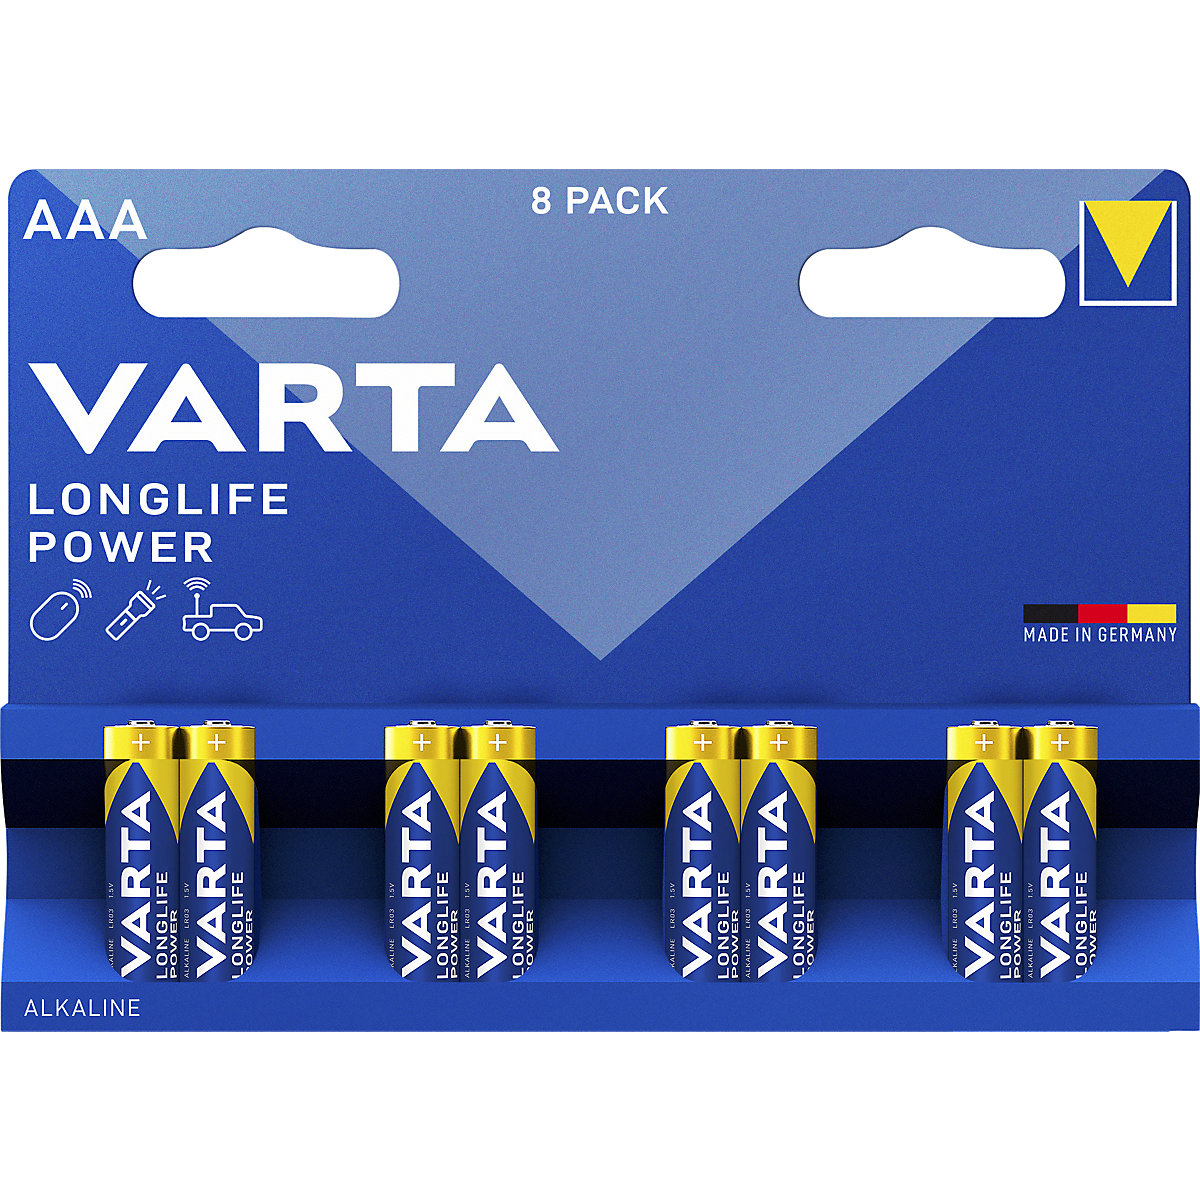 Baterie LONGLIFE Power – VARTA, AAA, bal.j. 8 ks, od 10 bal.j.-1